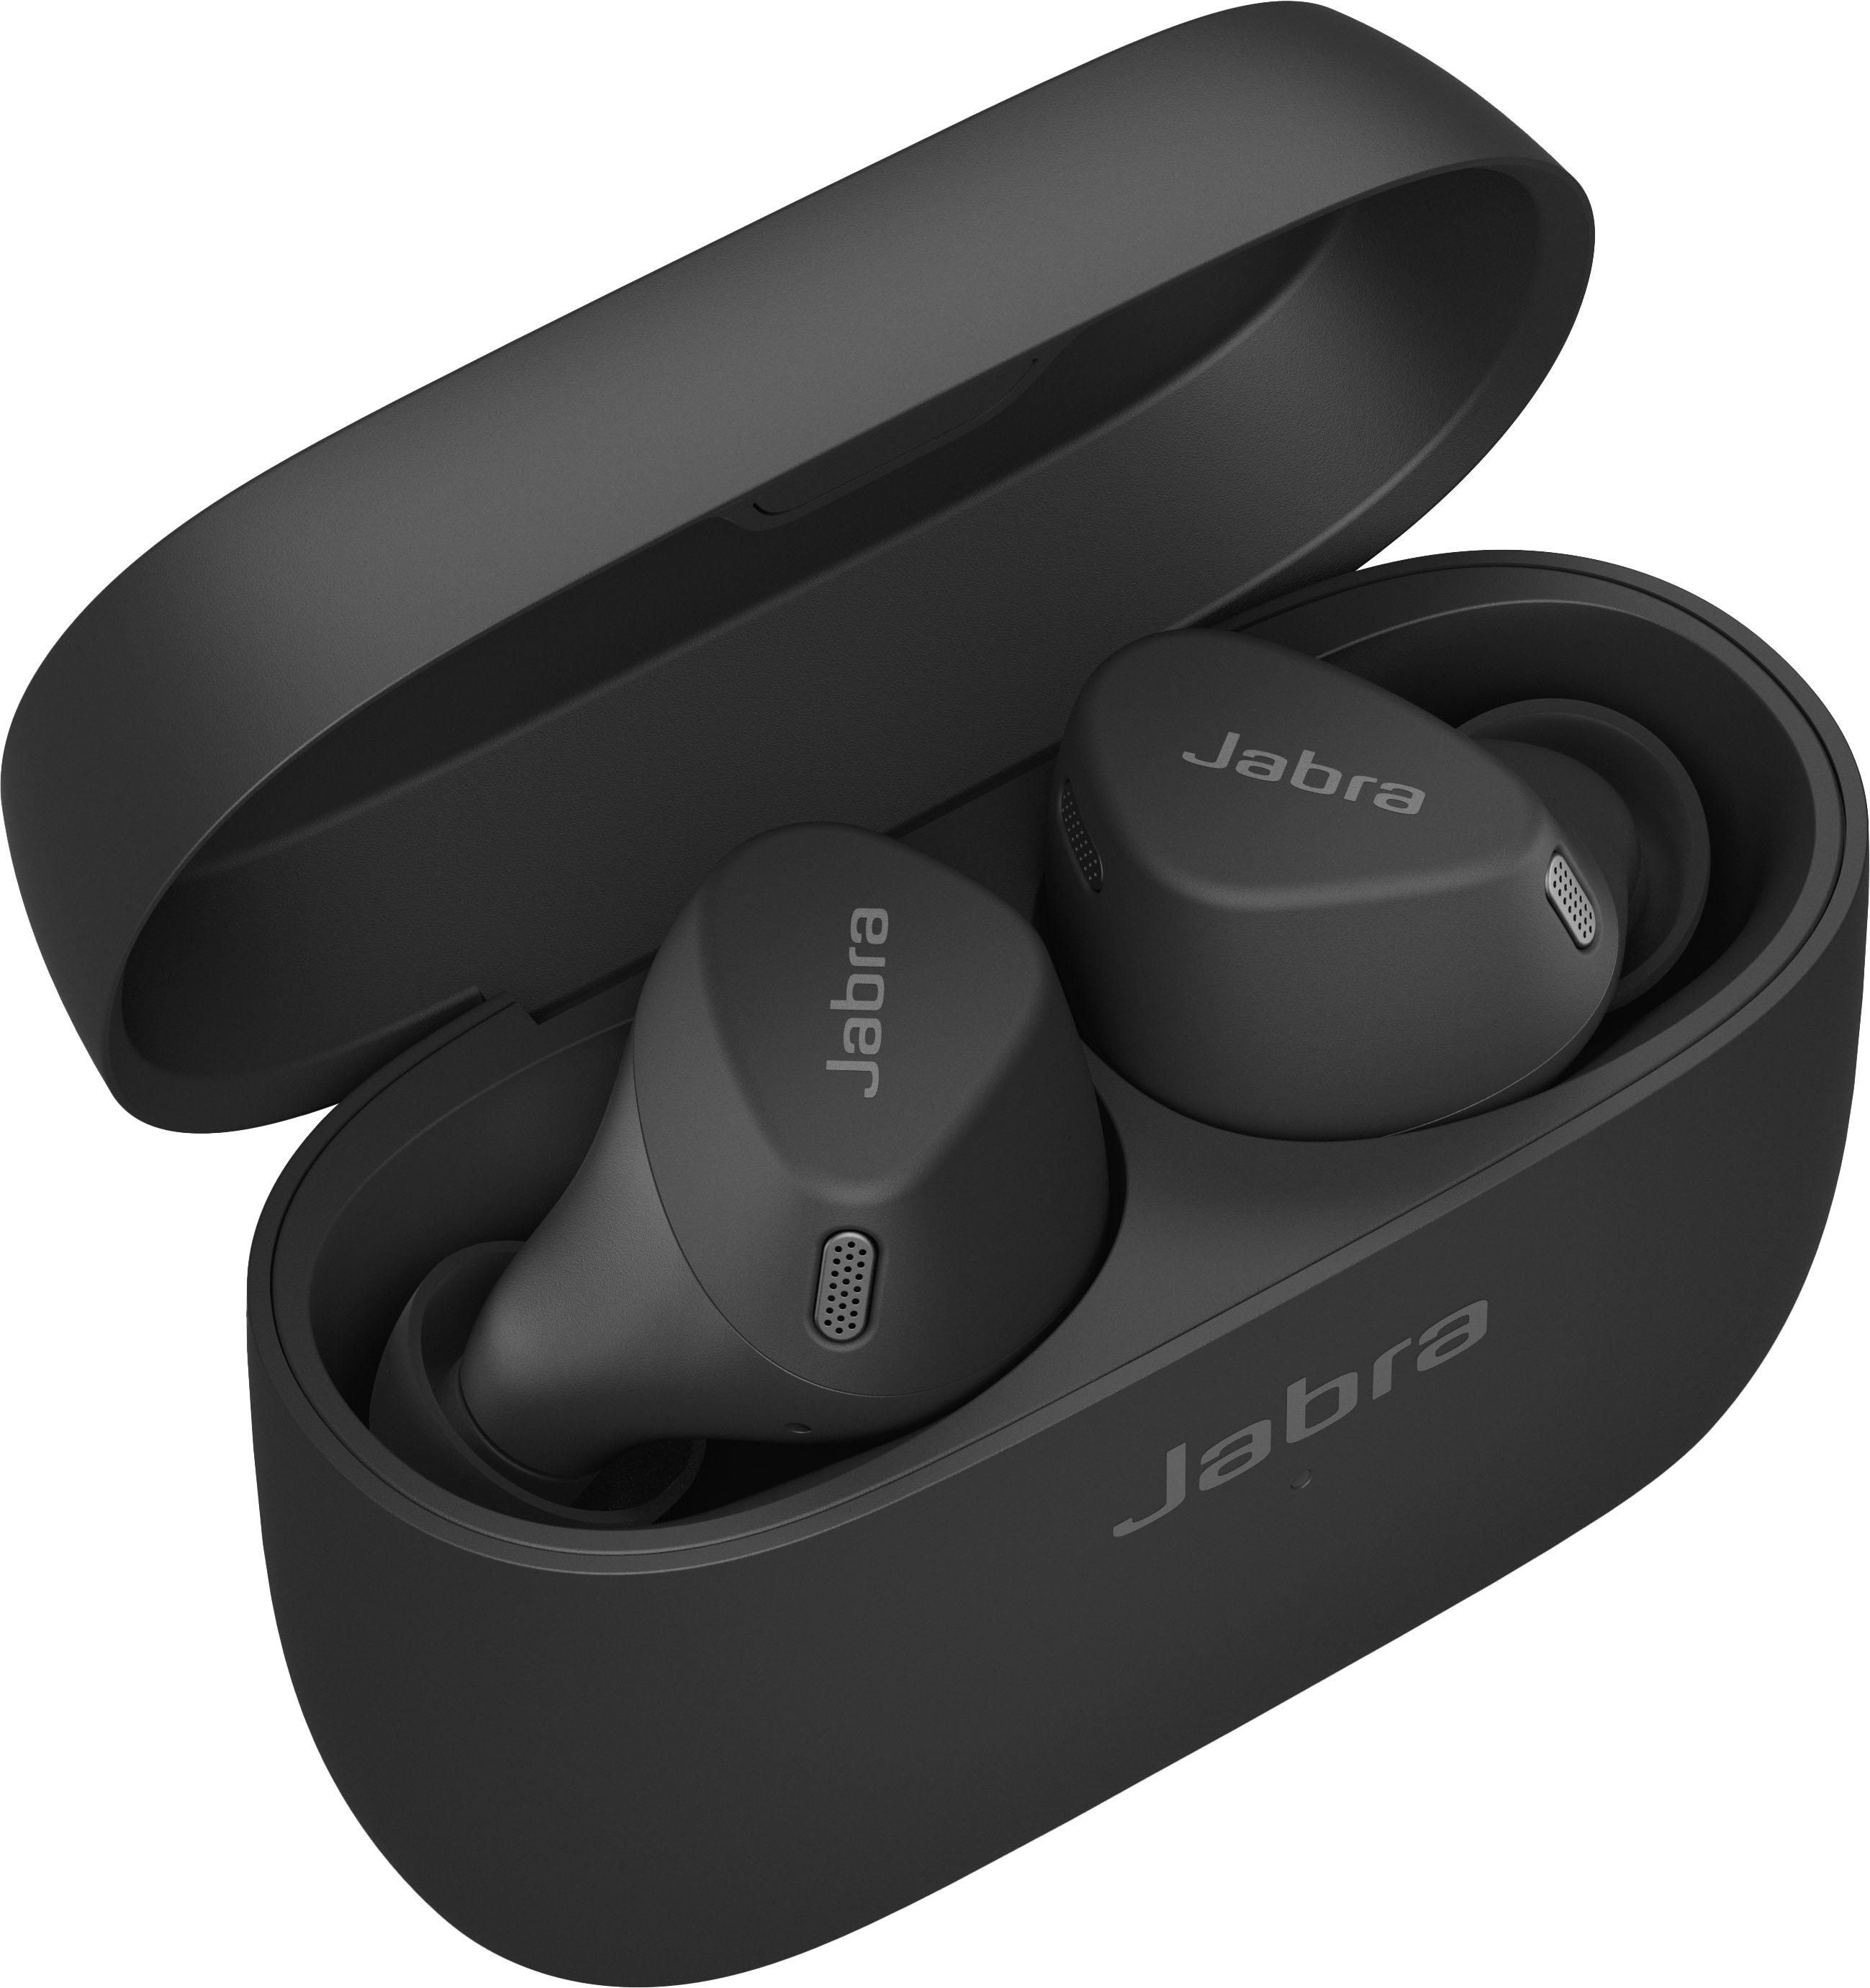 Angle View: Jabra - Elite 4 Active True Wireless Noise Cancelling In-Ear Headphones - Black